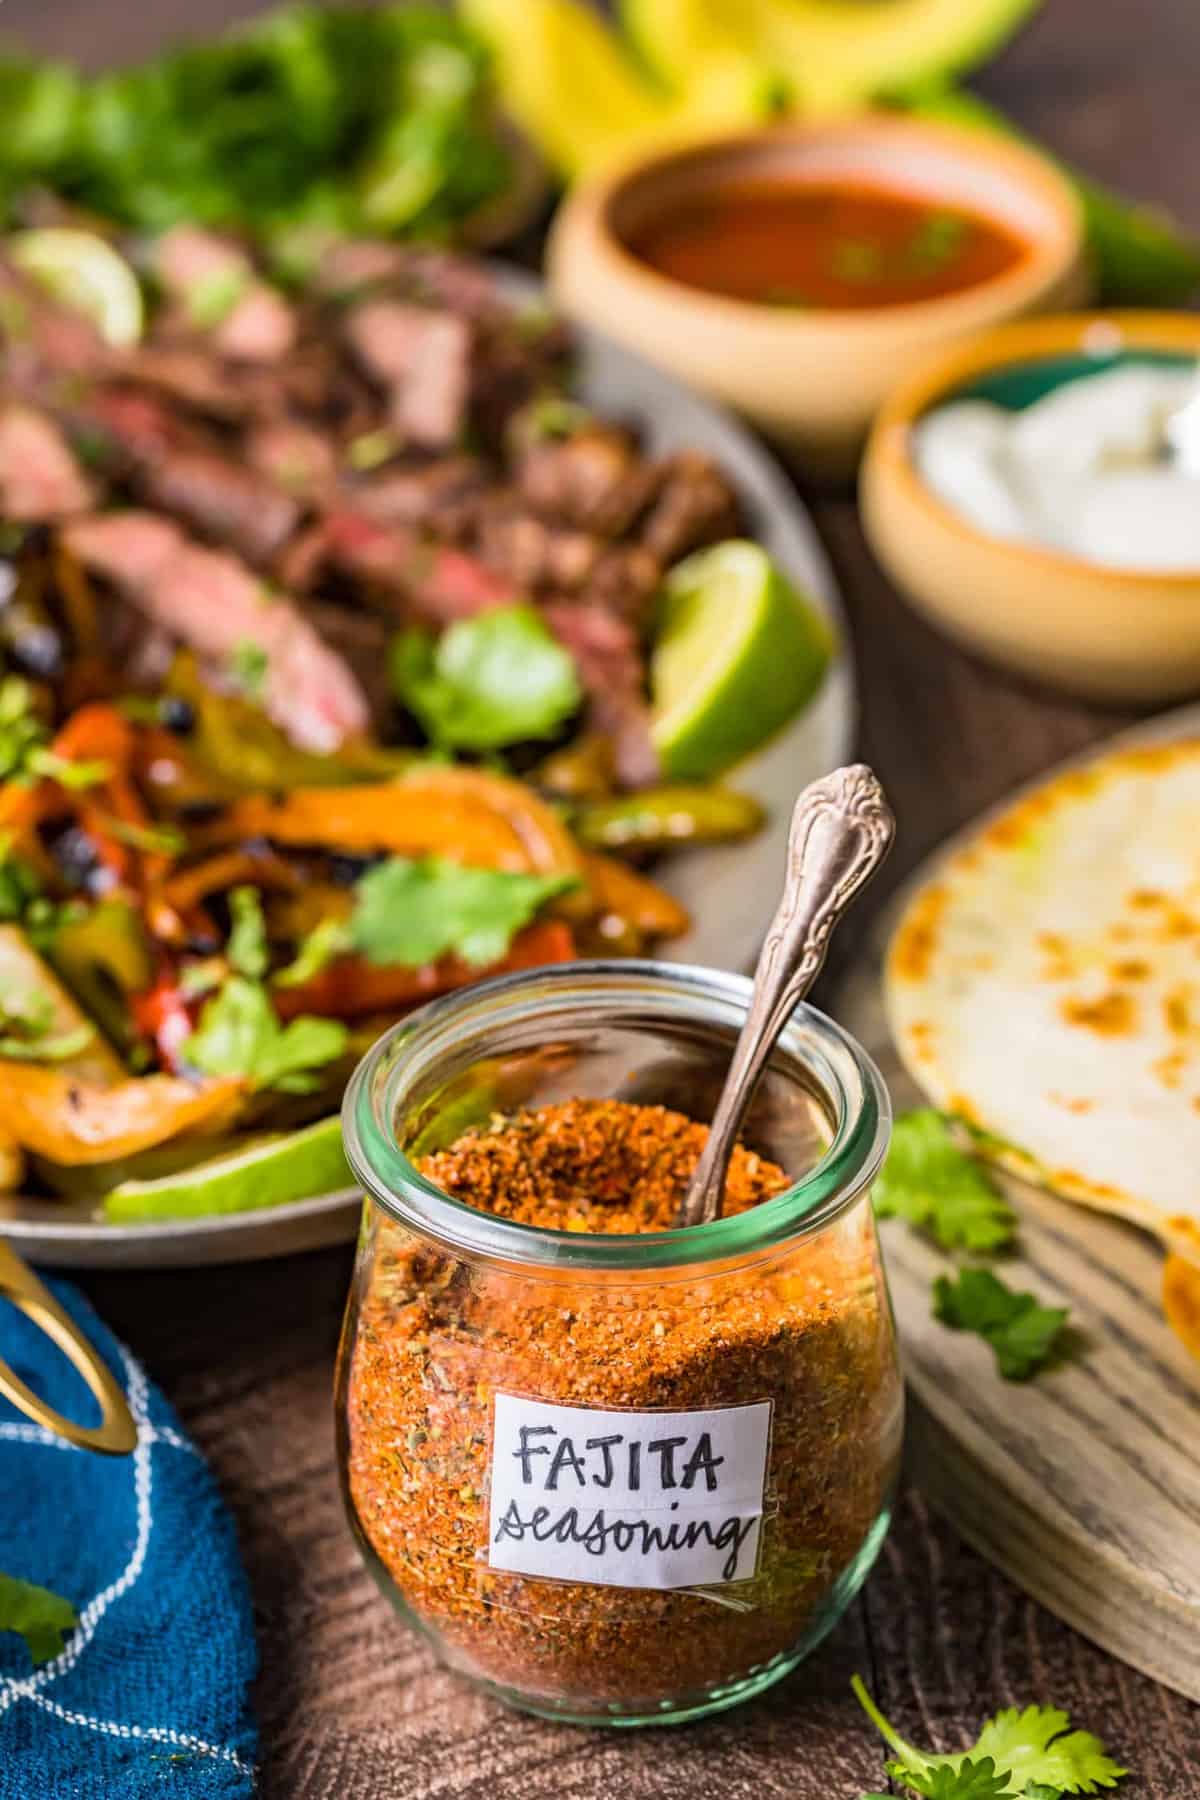 A jar of fajita seasoning next to grilled steak